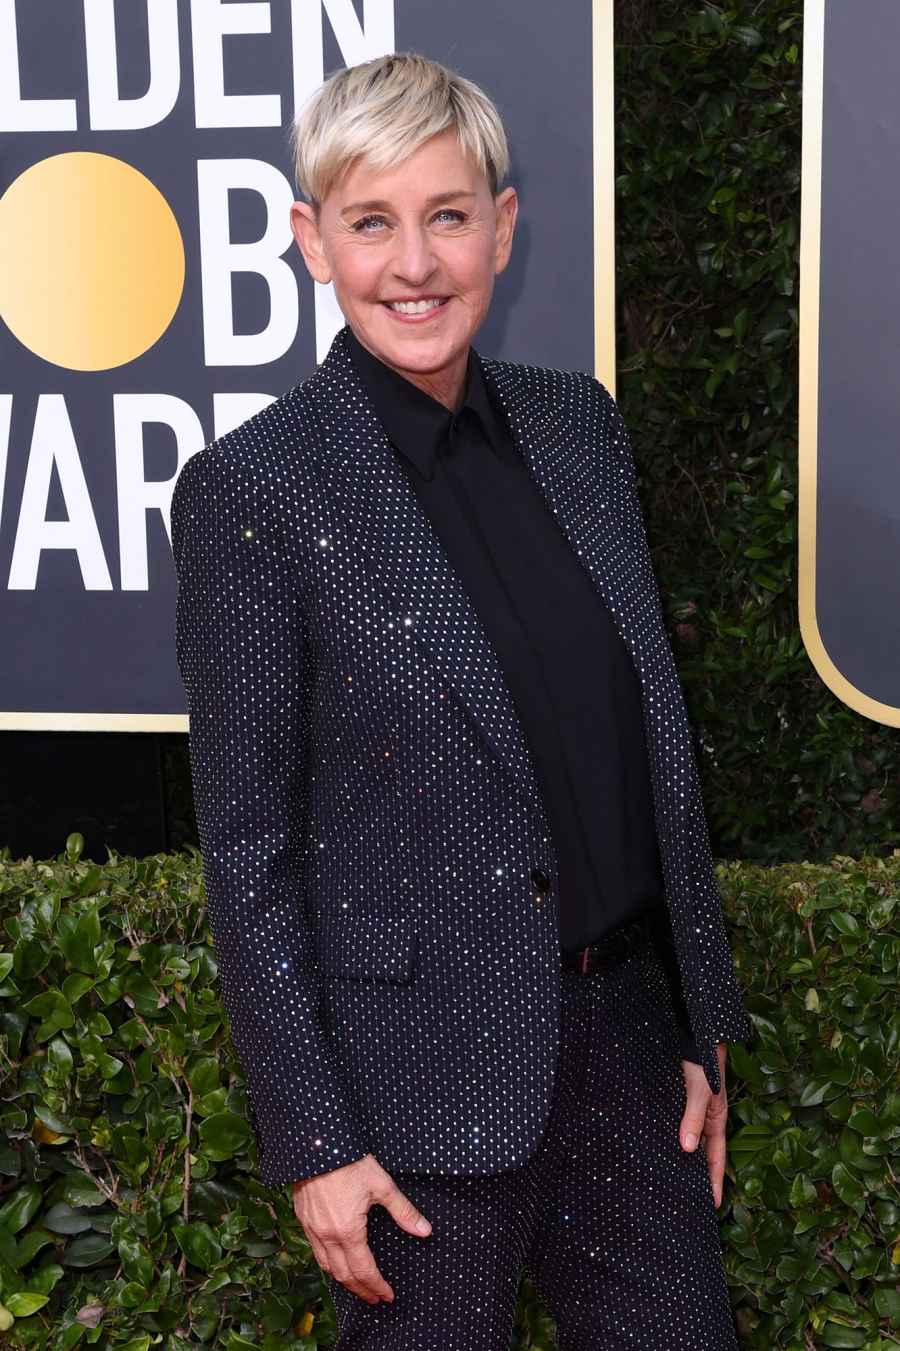 Ellen DeGeneres Stars Send Well Wishes to Tom Hanks and Rita Wilson After Coronavirus Diagnosis